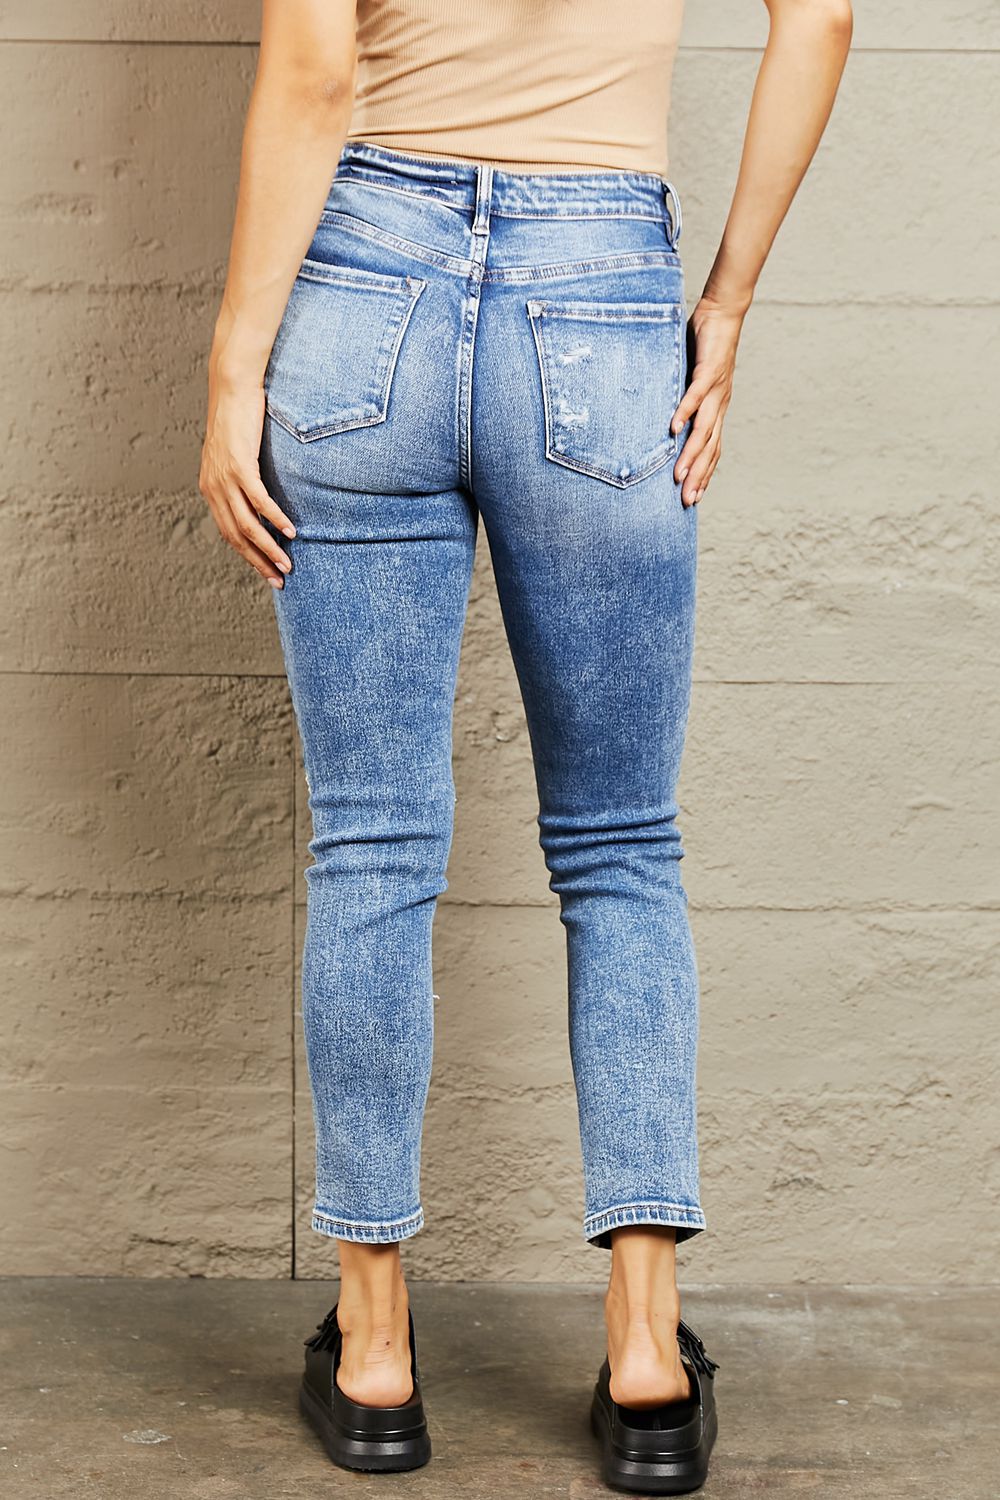 BAYEAS Bridgette Mid Rise Distressed Skinny Jeans